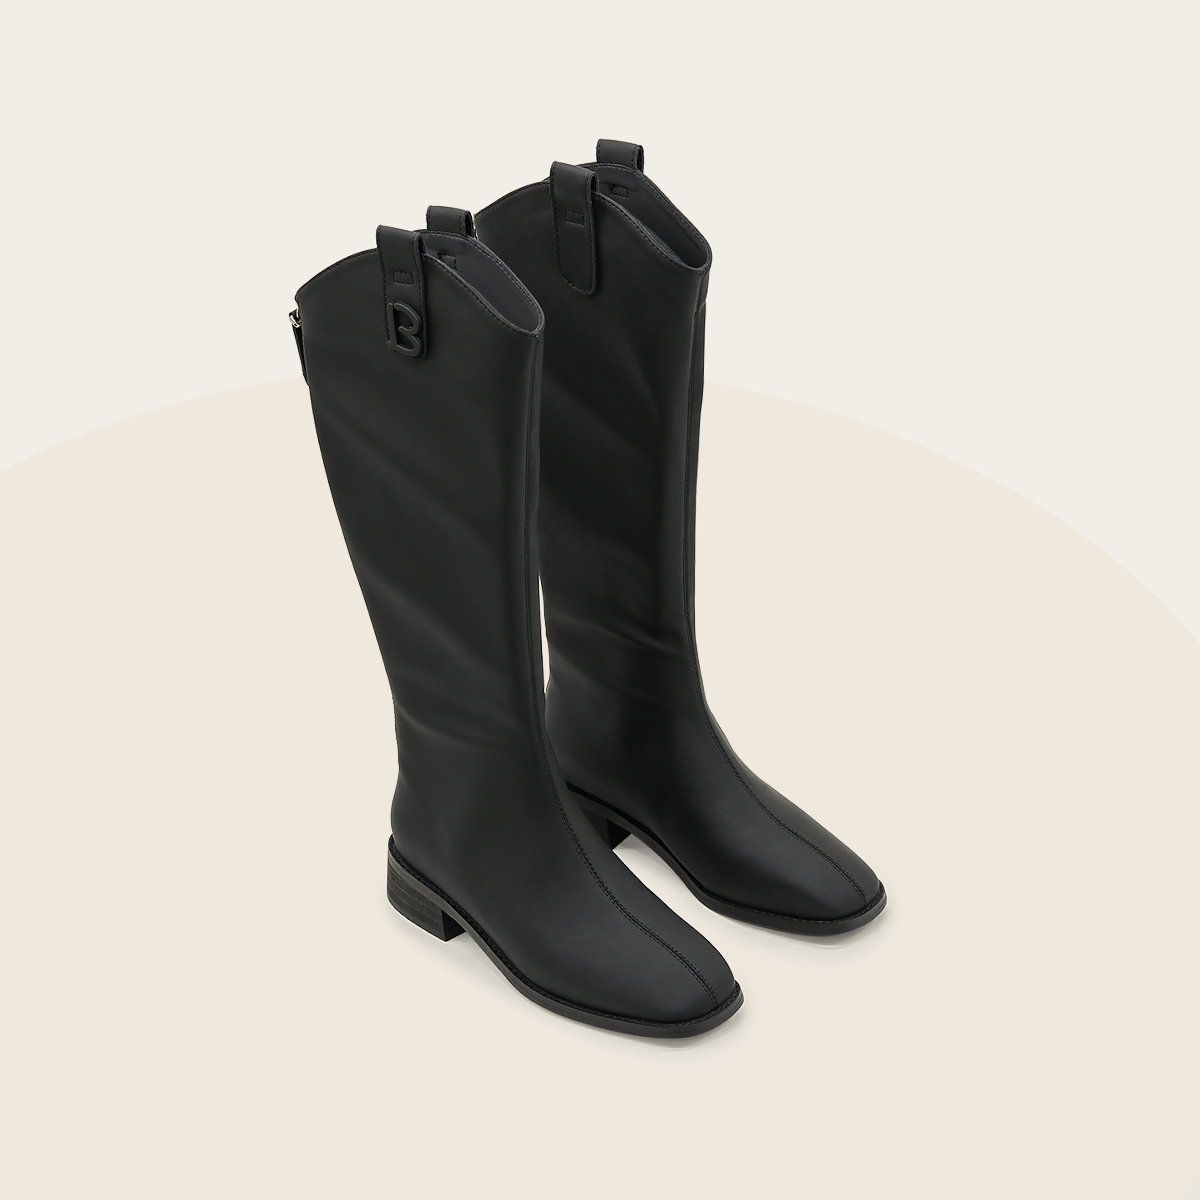 Giày bốt nữ cổ cao Boots thời trang mềm êm cao cấp bAimée & bAmor - MS0054